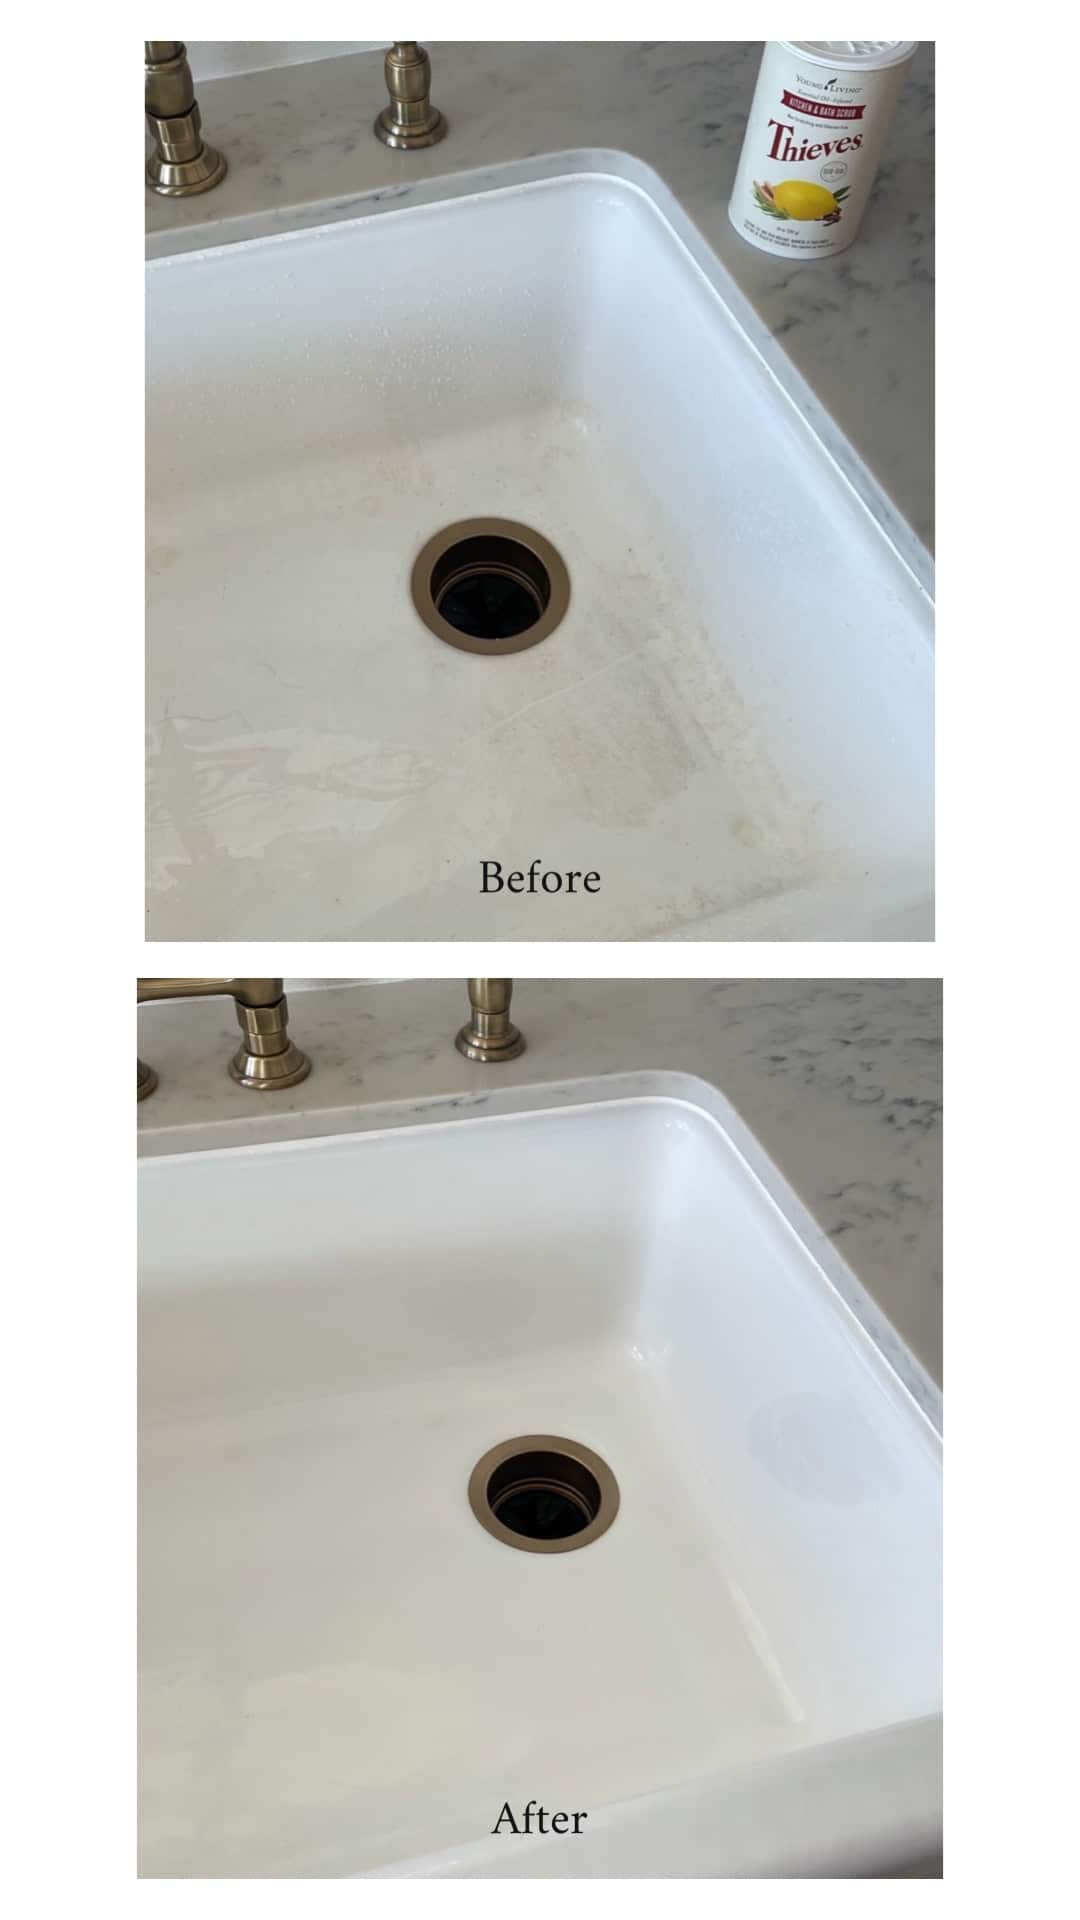 Six Simple Secrets for a Shiny Sink